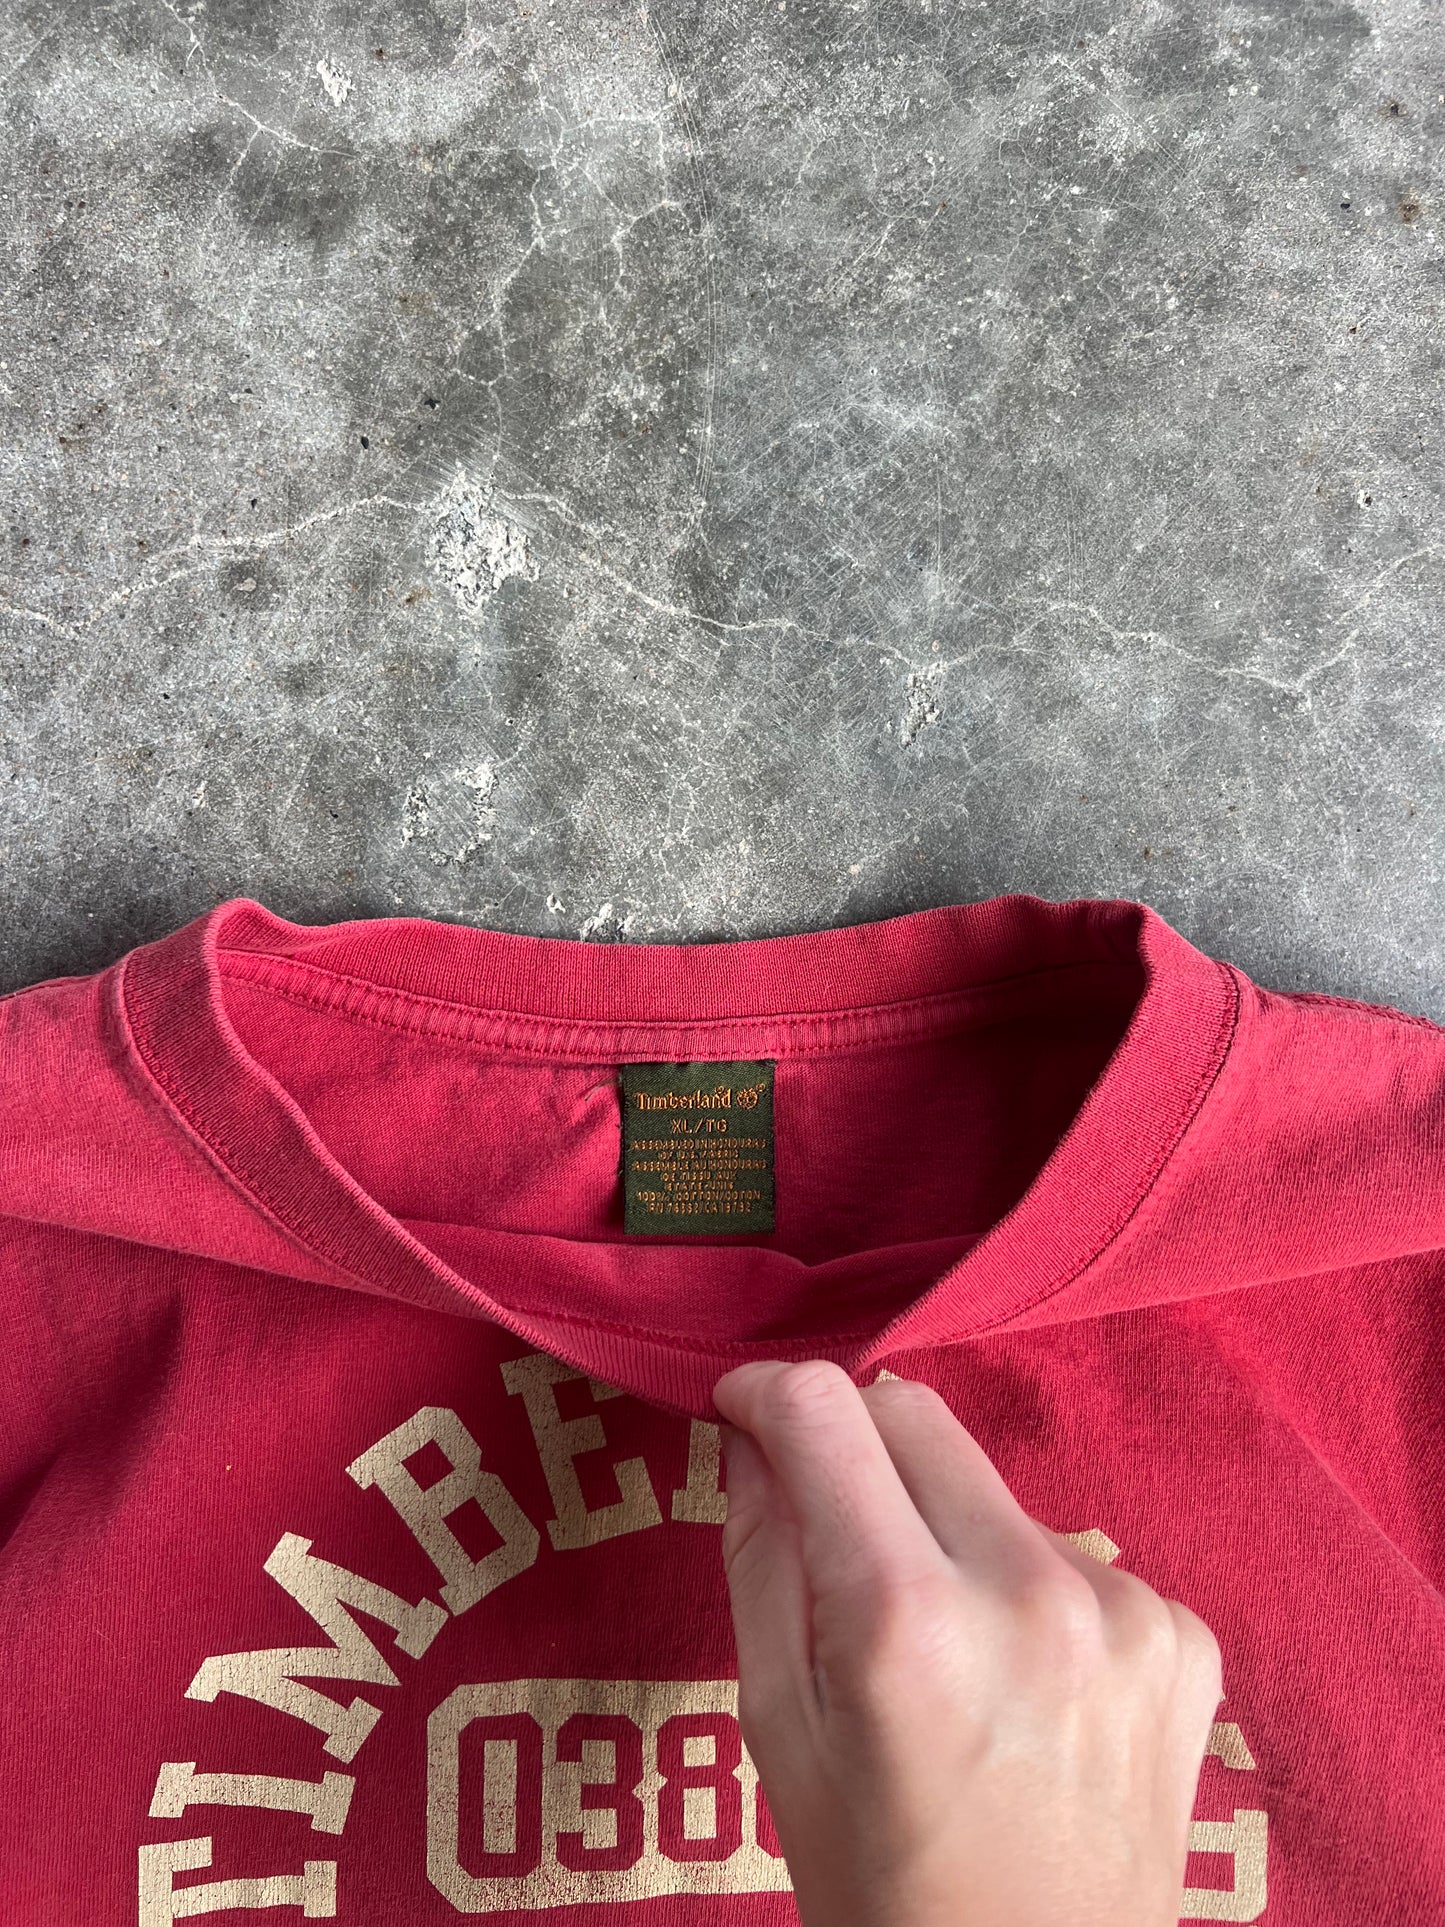 Vintage Red Timberland Shirt - XL